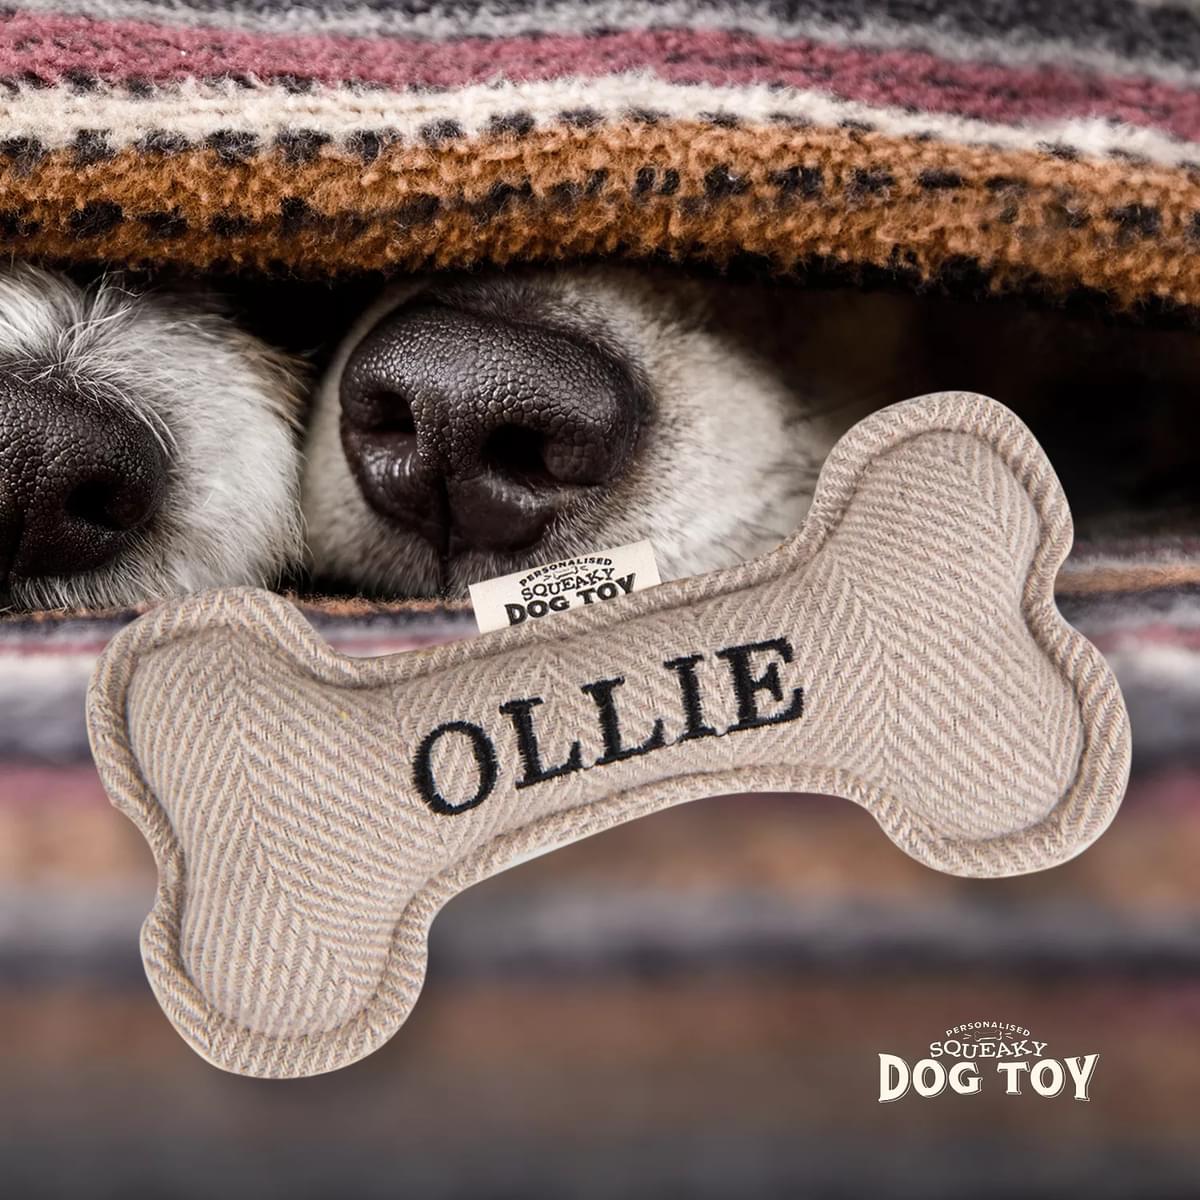 Named Squeaky Dog Toy- Ollie. Bone shaped herringbone tweed pattern dog toy. 